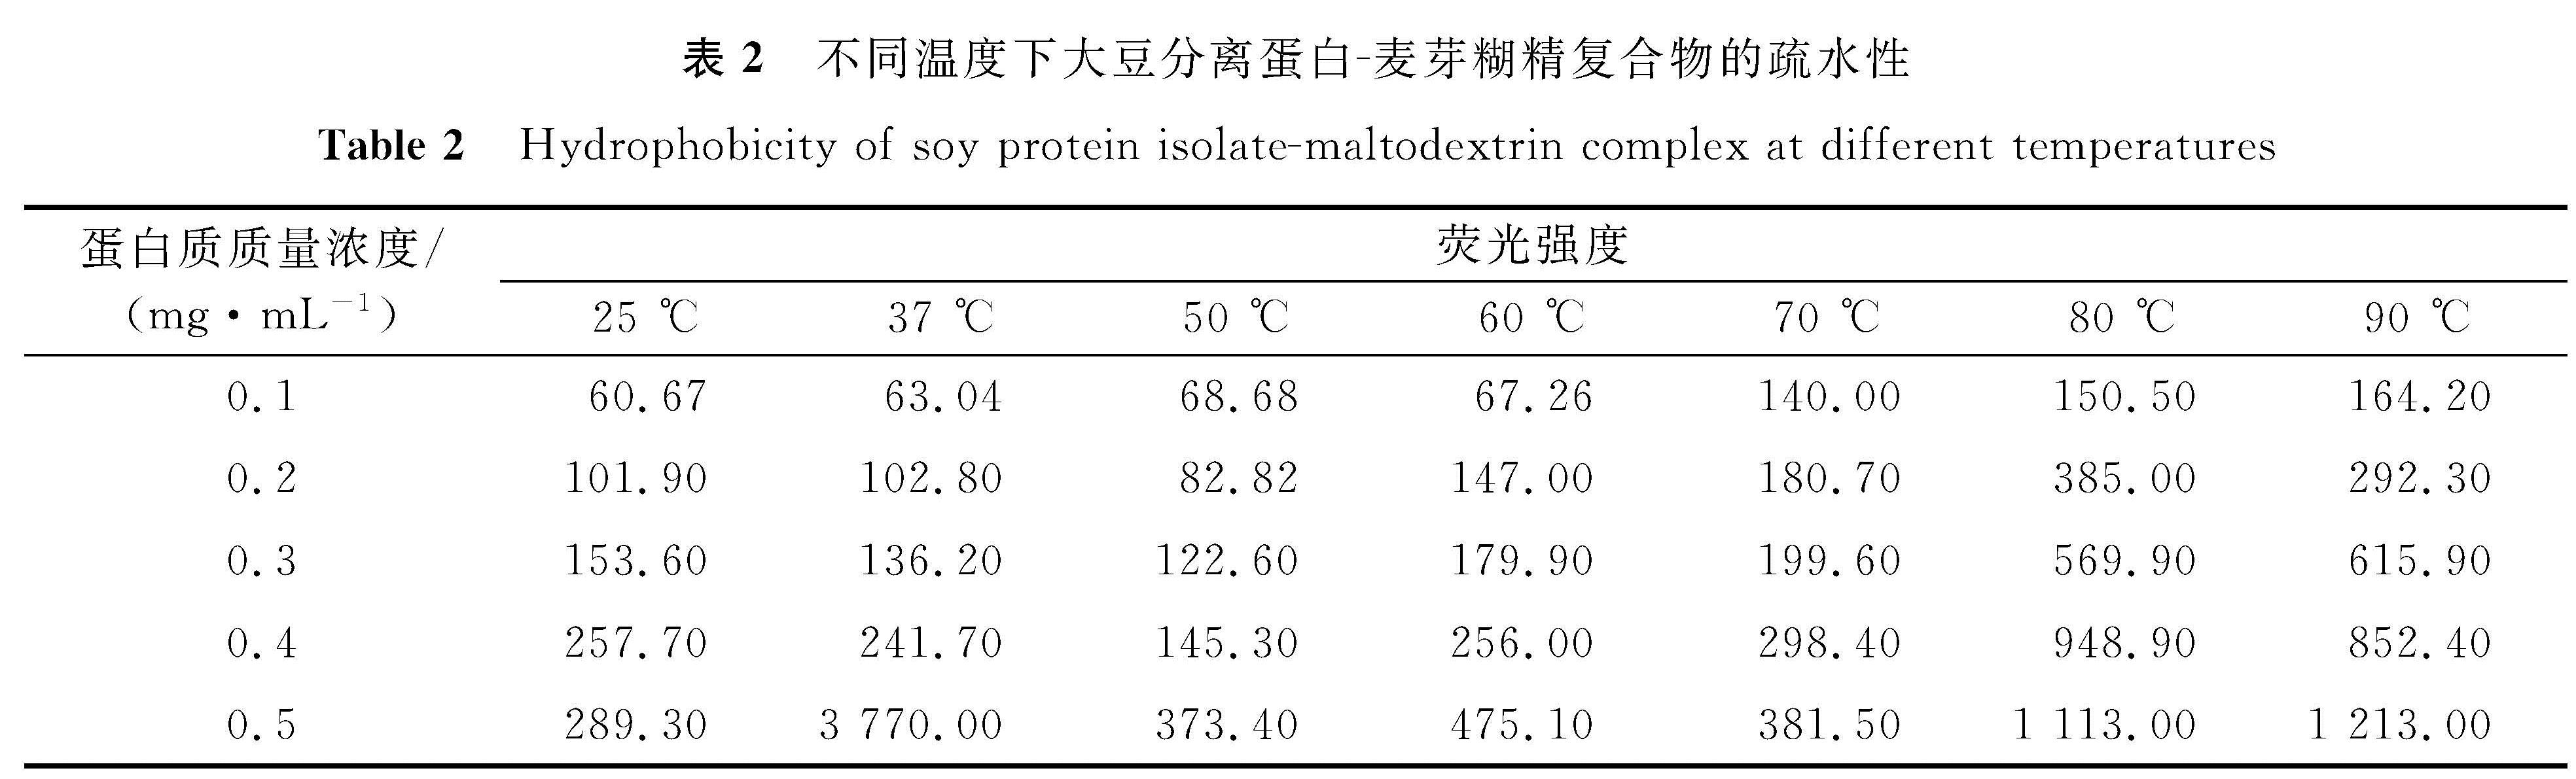 表2 不同温度下大豆分离蛋白-麦芽糊精复合物的疏水性<br/>Table 2 Hydrophobicity of soy protein isolate-maltodextrin complex at different temperatures